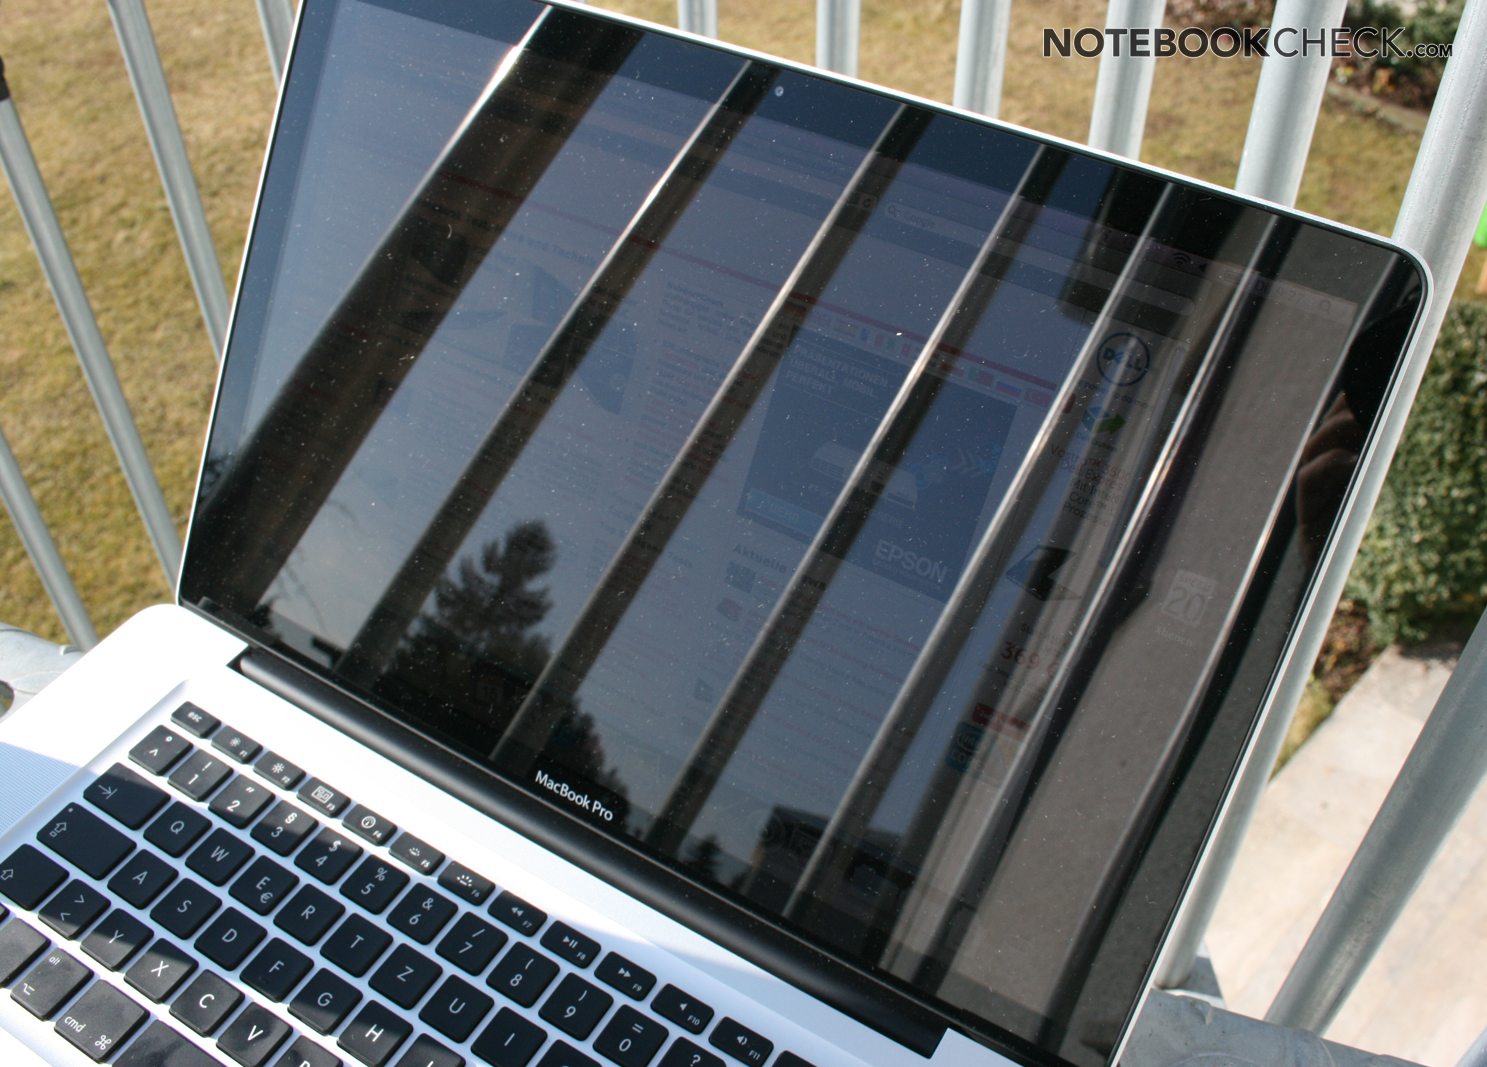 Пленка на экран ноутбука. Apple MACBOOK Pro 15 early 2011. Глянцевый дисплей ноутбука. Матовый экран ноутбука. Ноутбук с глянцевым экраном.